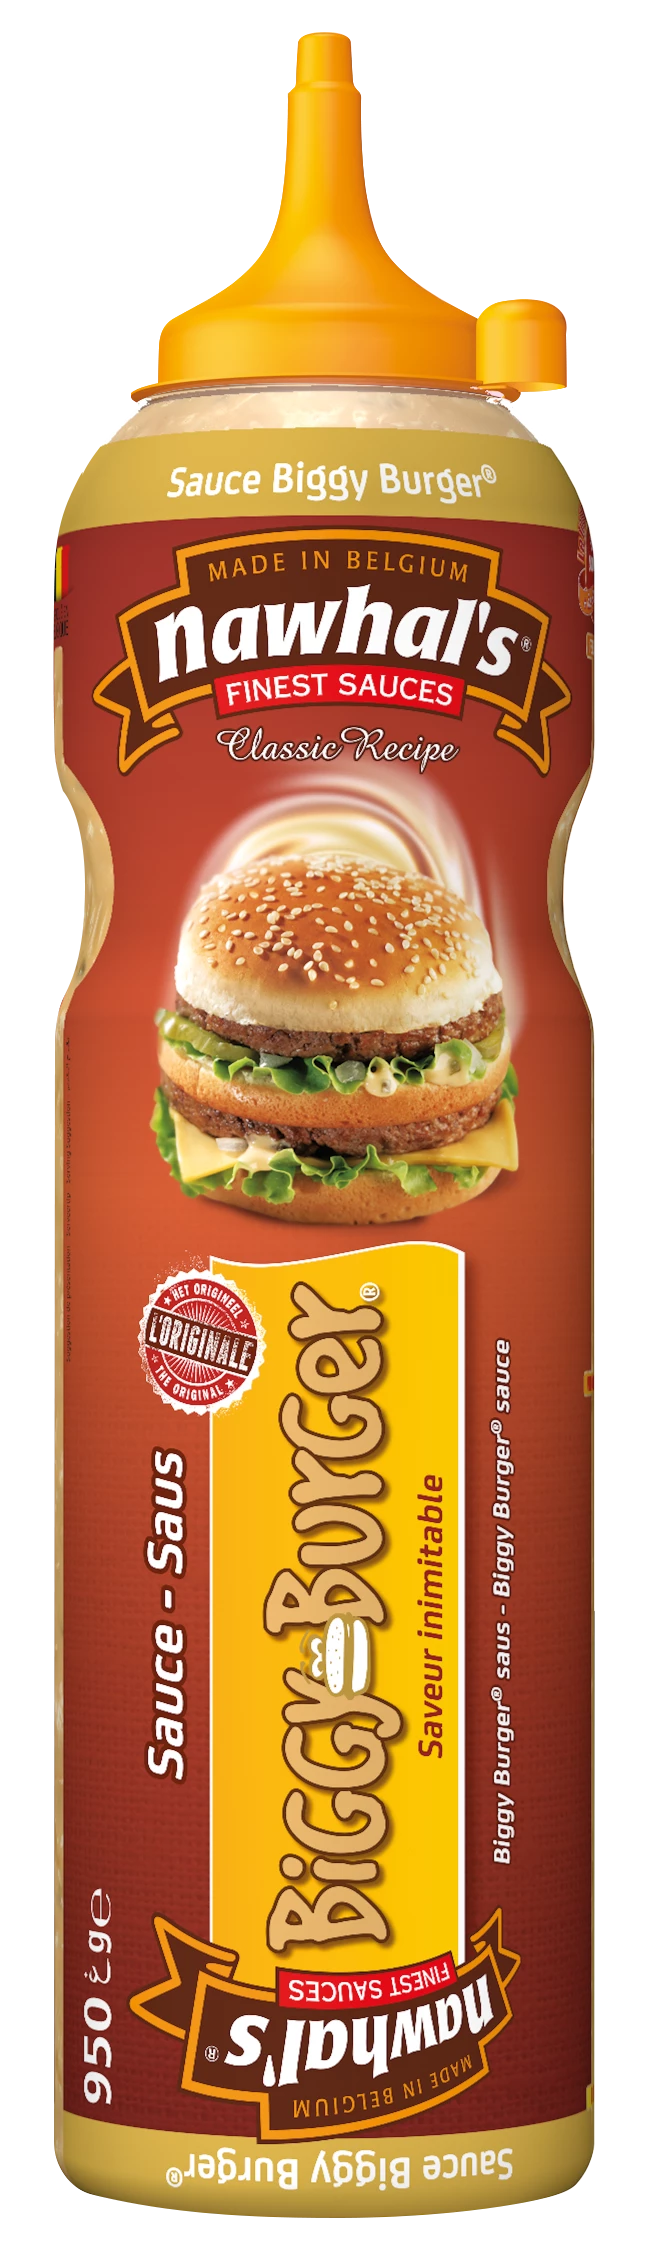 Sauce Biggy Burger 950gr / 950ml - NAWHAL'S